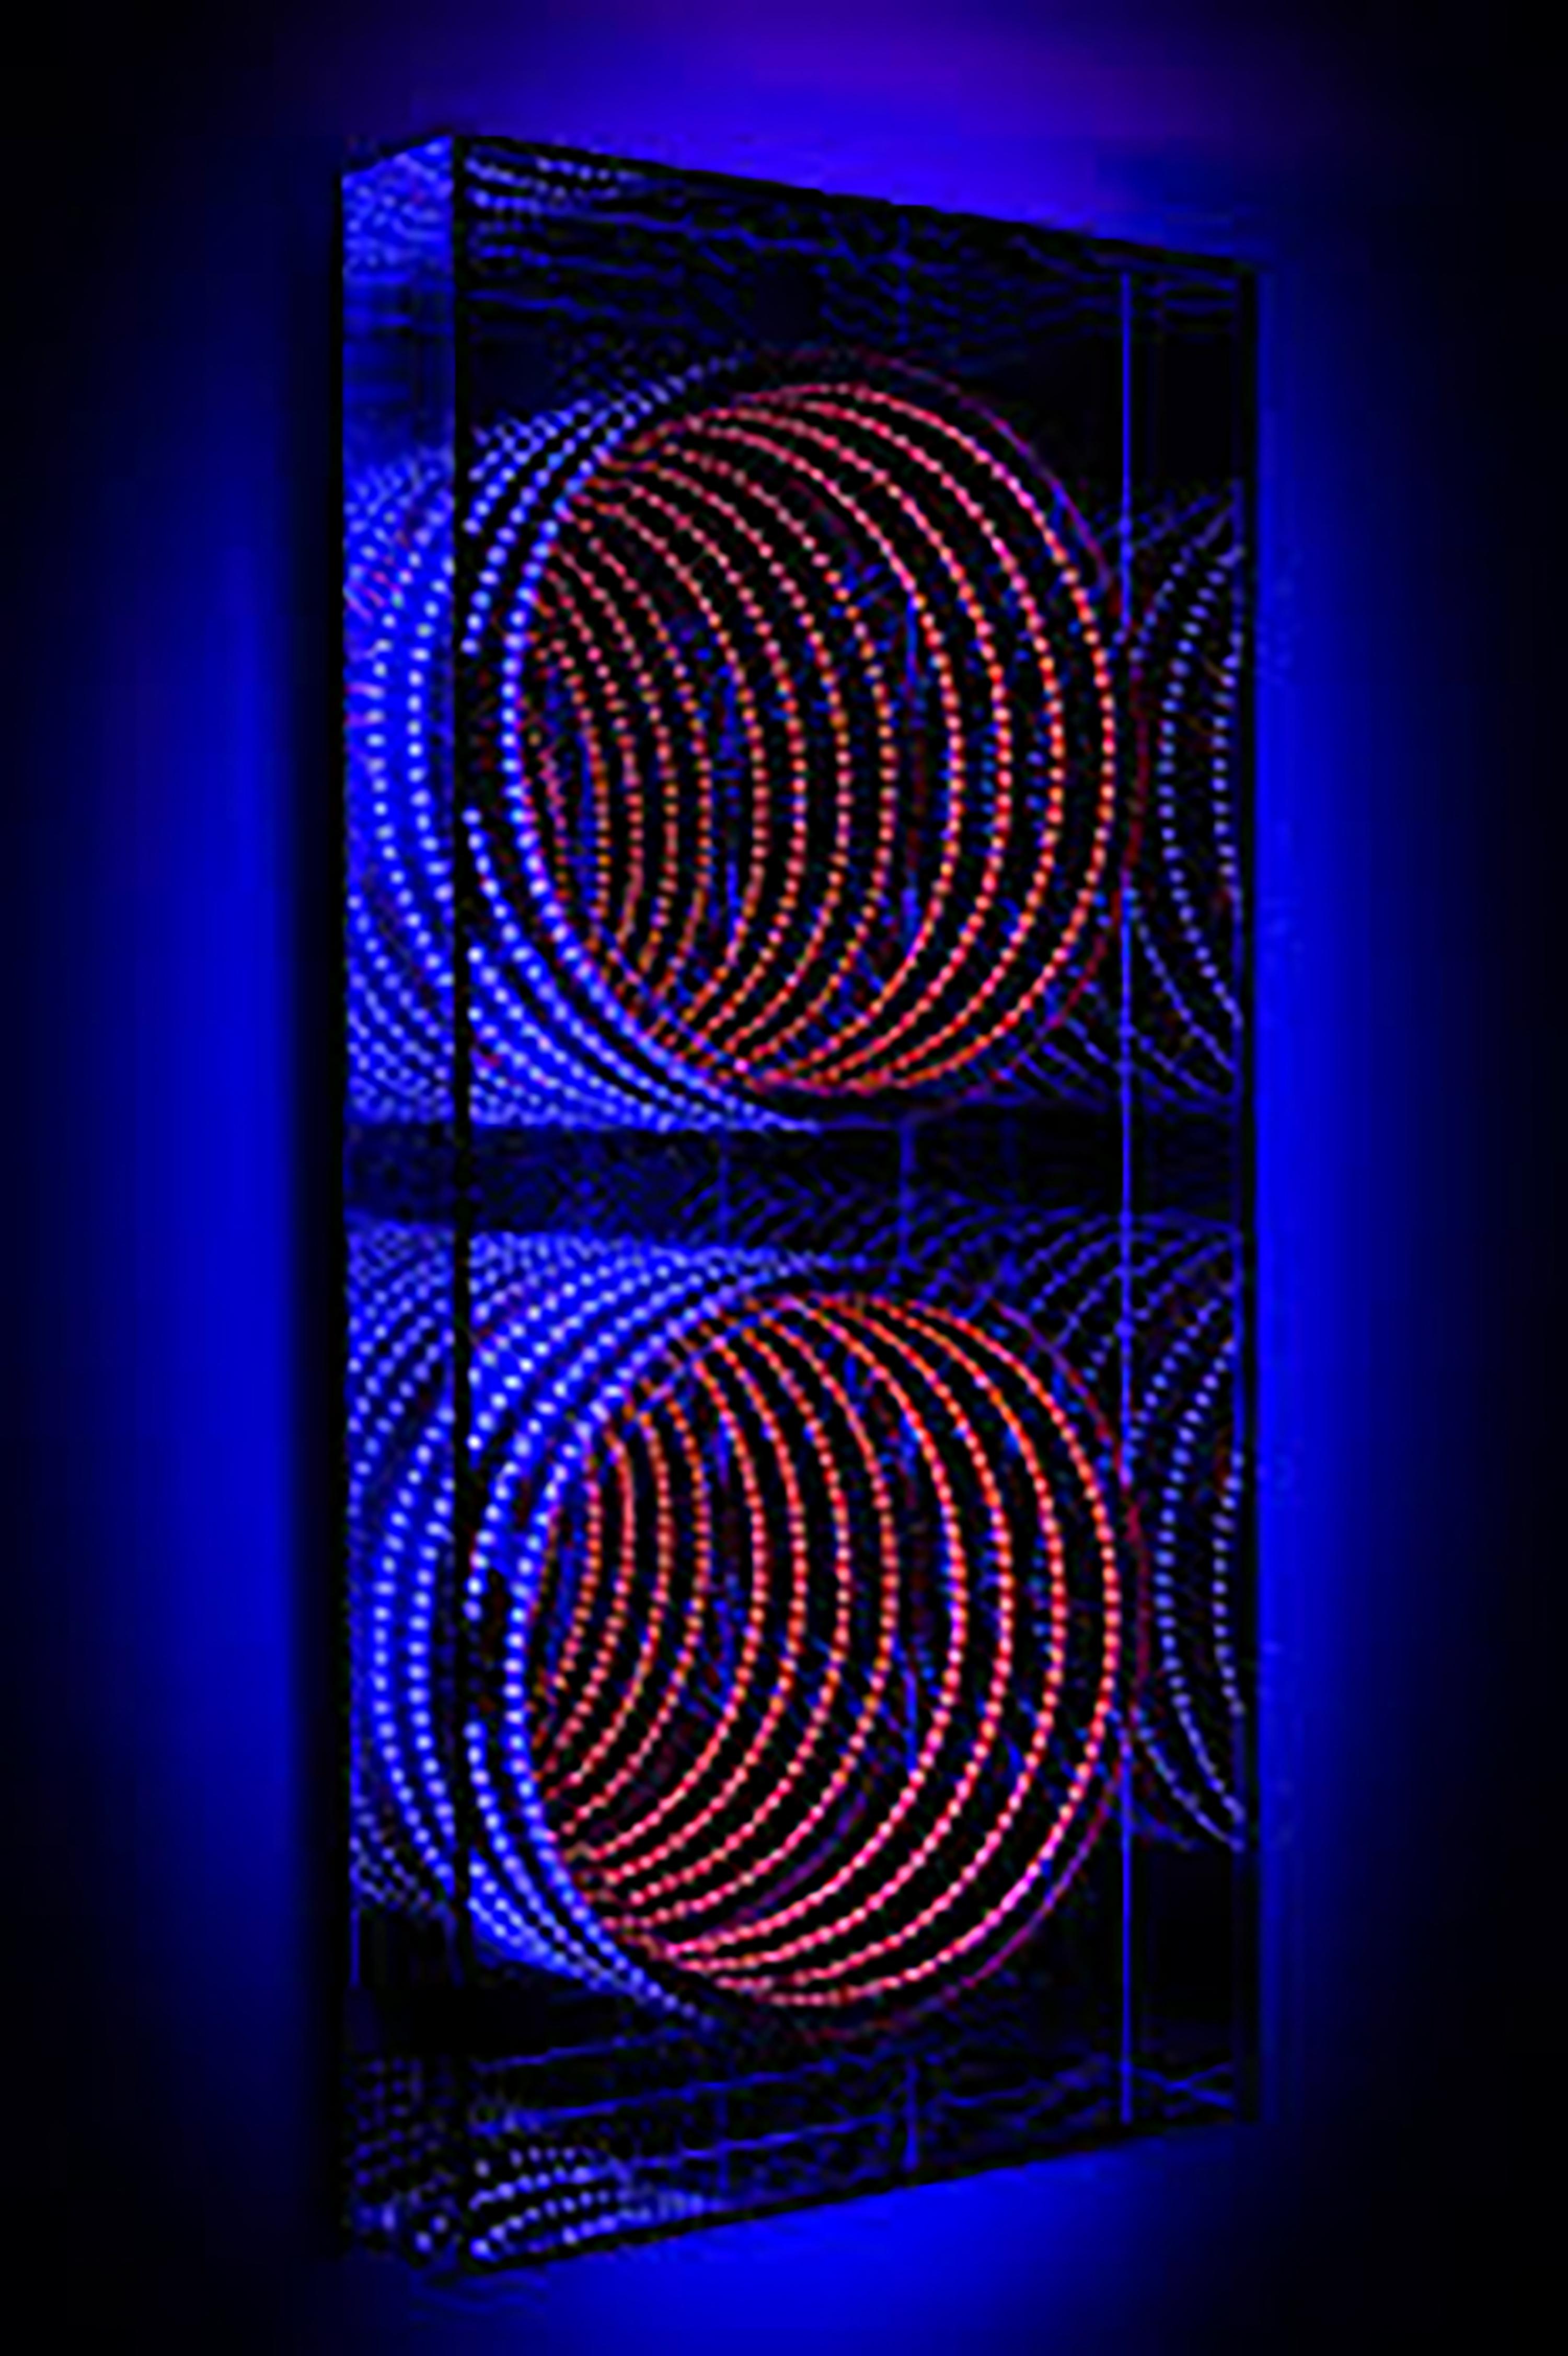 2 Infinity Circles Light Box - Pop Art Mixed Media Art by Falcone